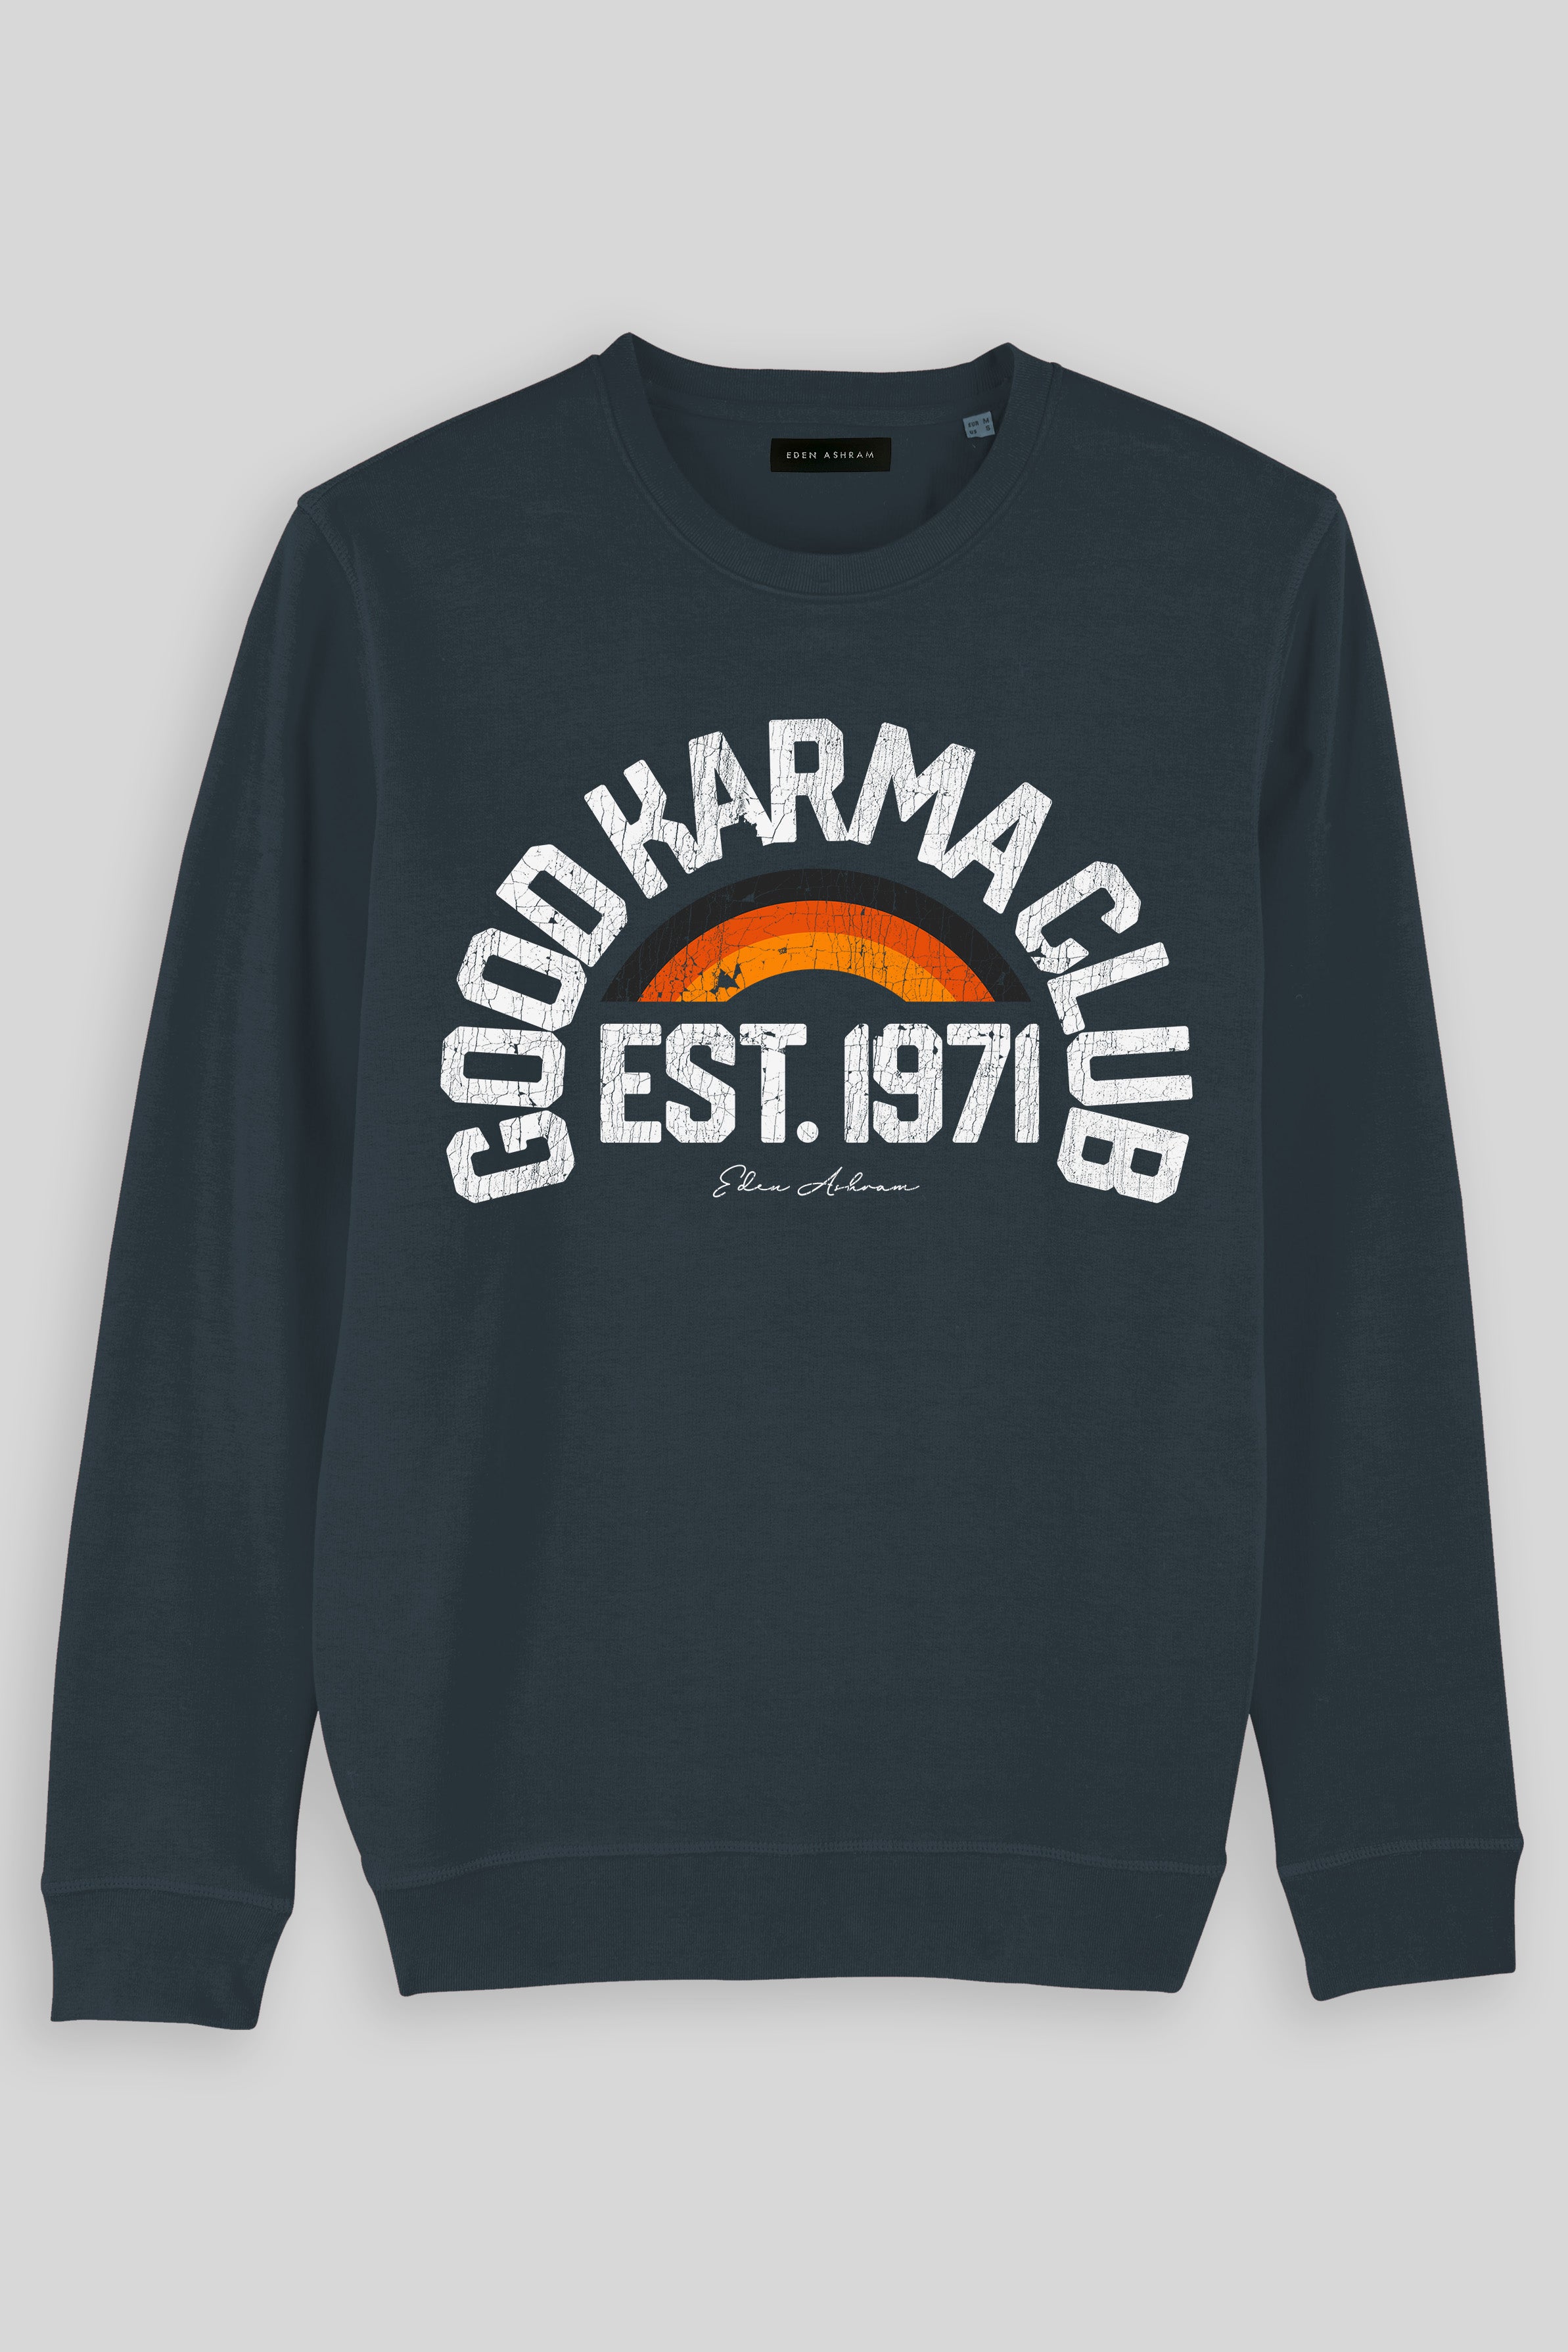 EDEN ASHRAM Good Karma Club Premium Crew Neck Sweatshirt India Ink Grey